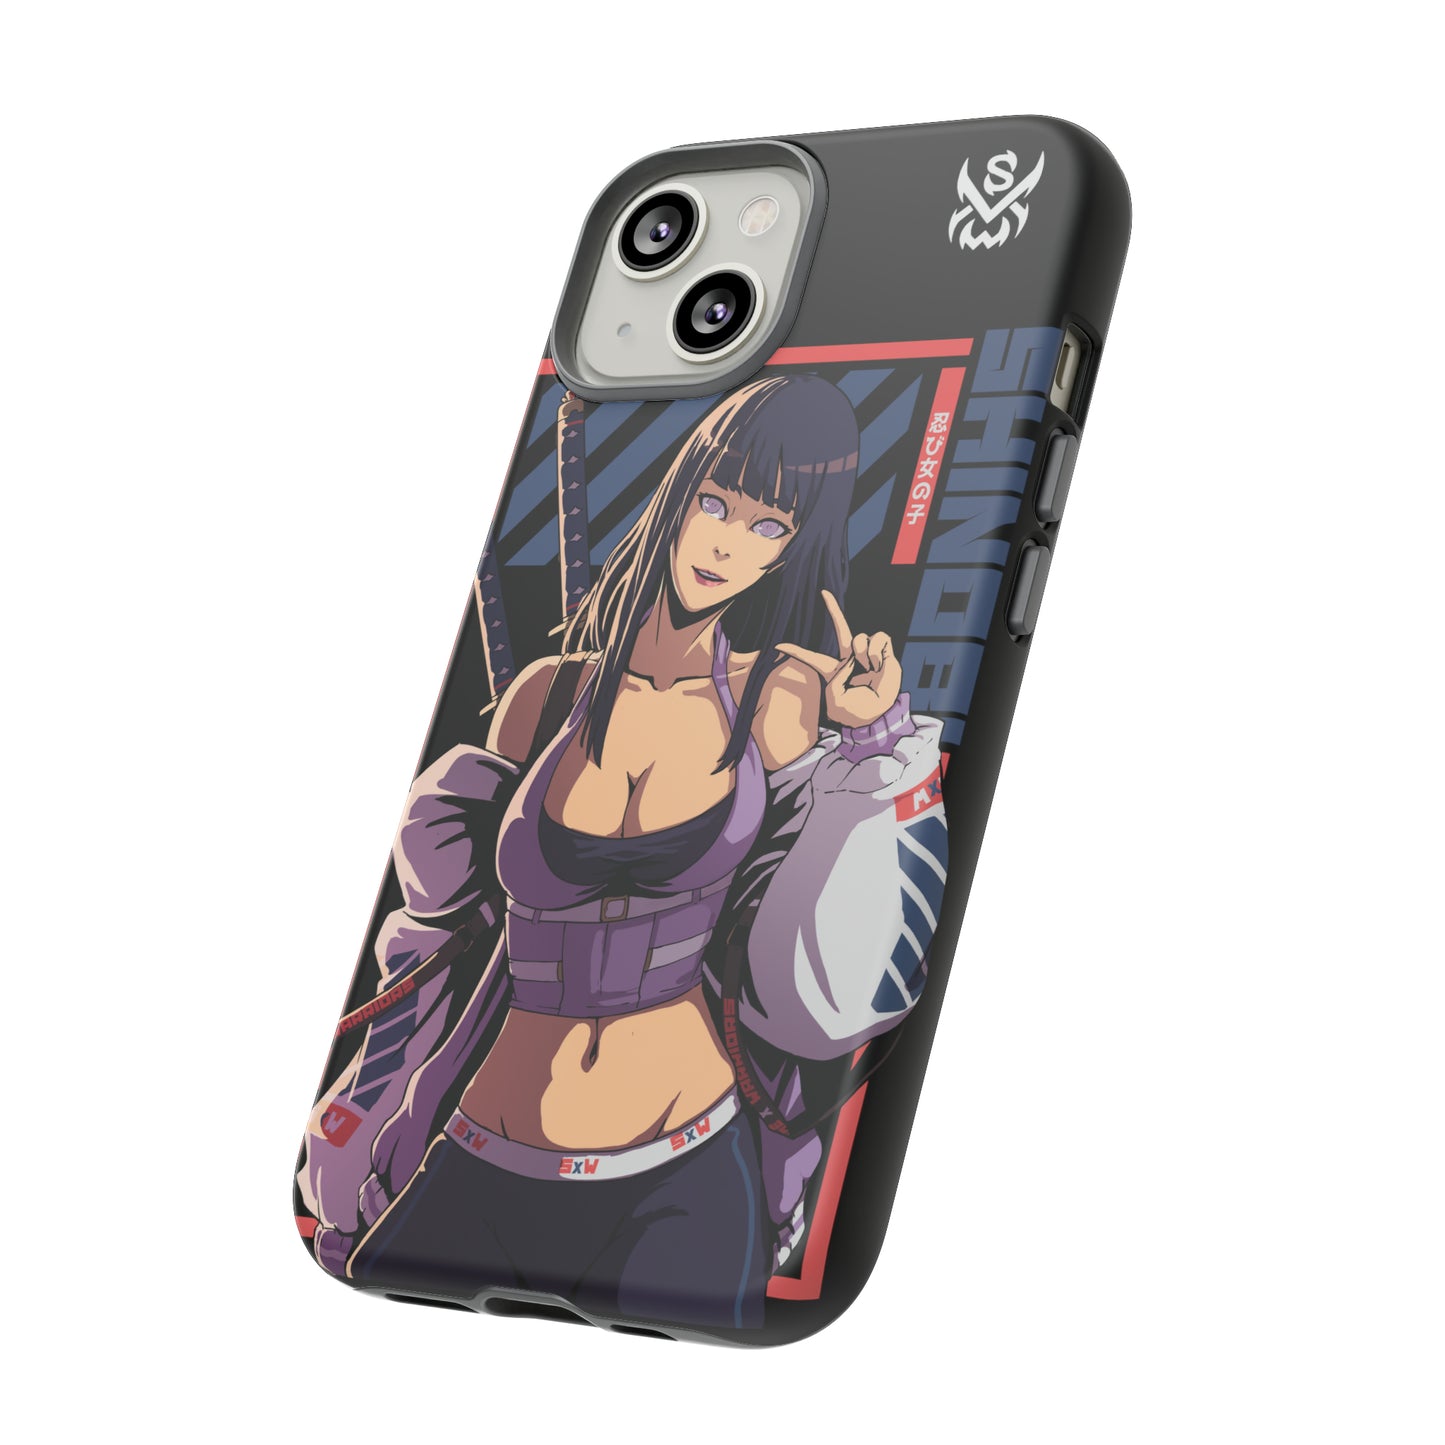 Shinobi Girl / iPhone Case - LIMITED